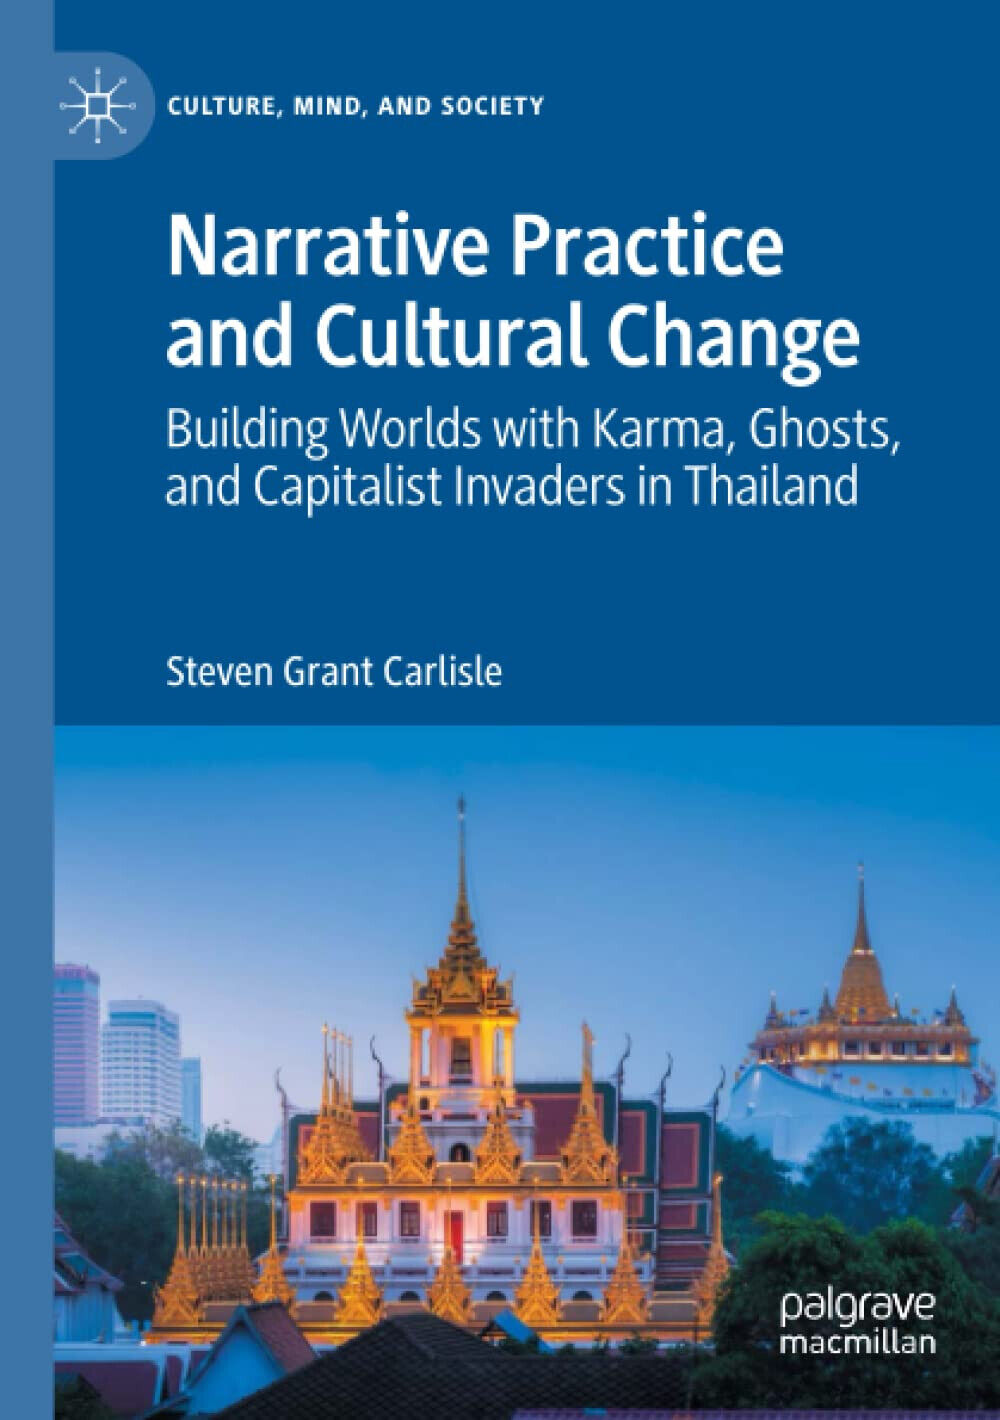 Narrative Practice And Cultural Change - Steven Grant Carlisle - Palgrave, 2021